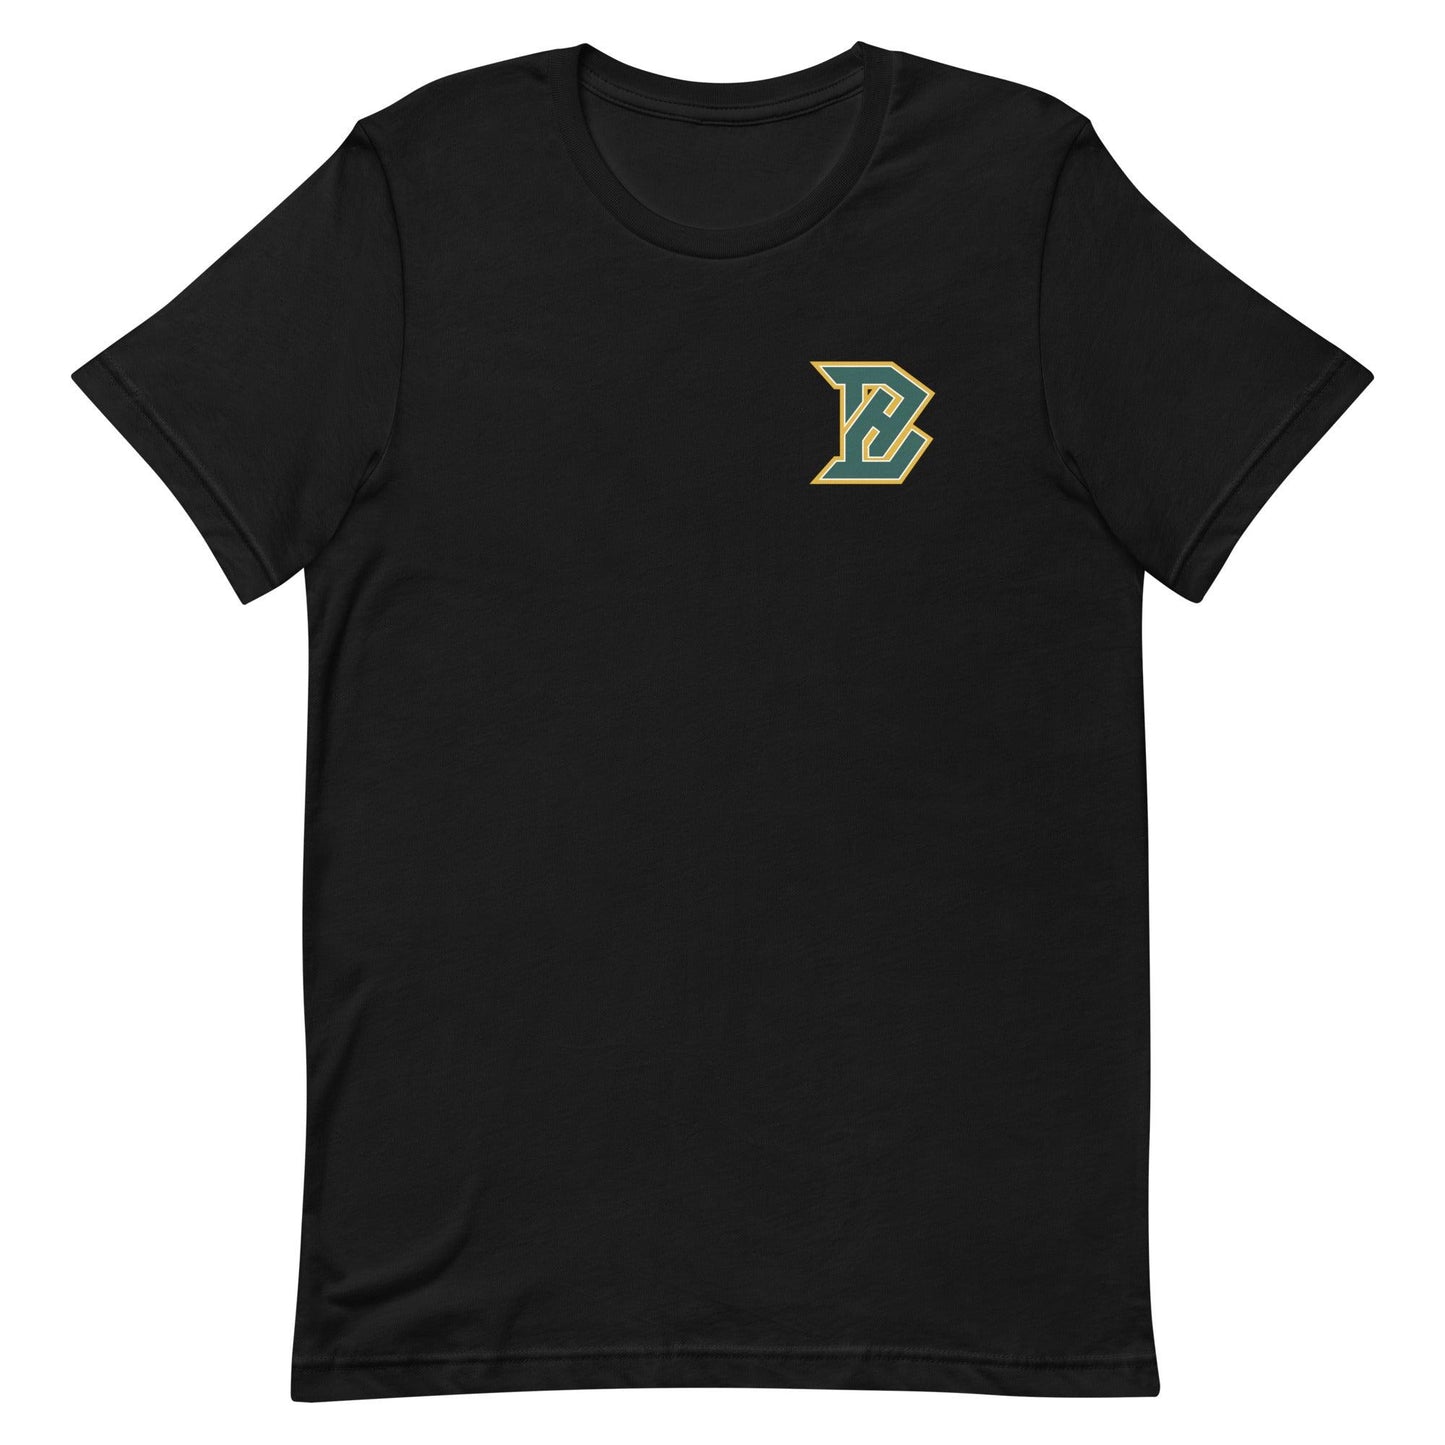 Brent Honeywell "Essential" t-shirt - Fan Arch